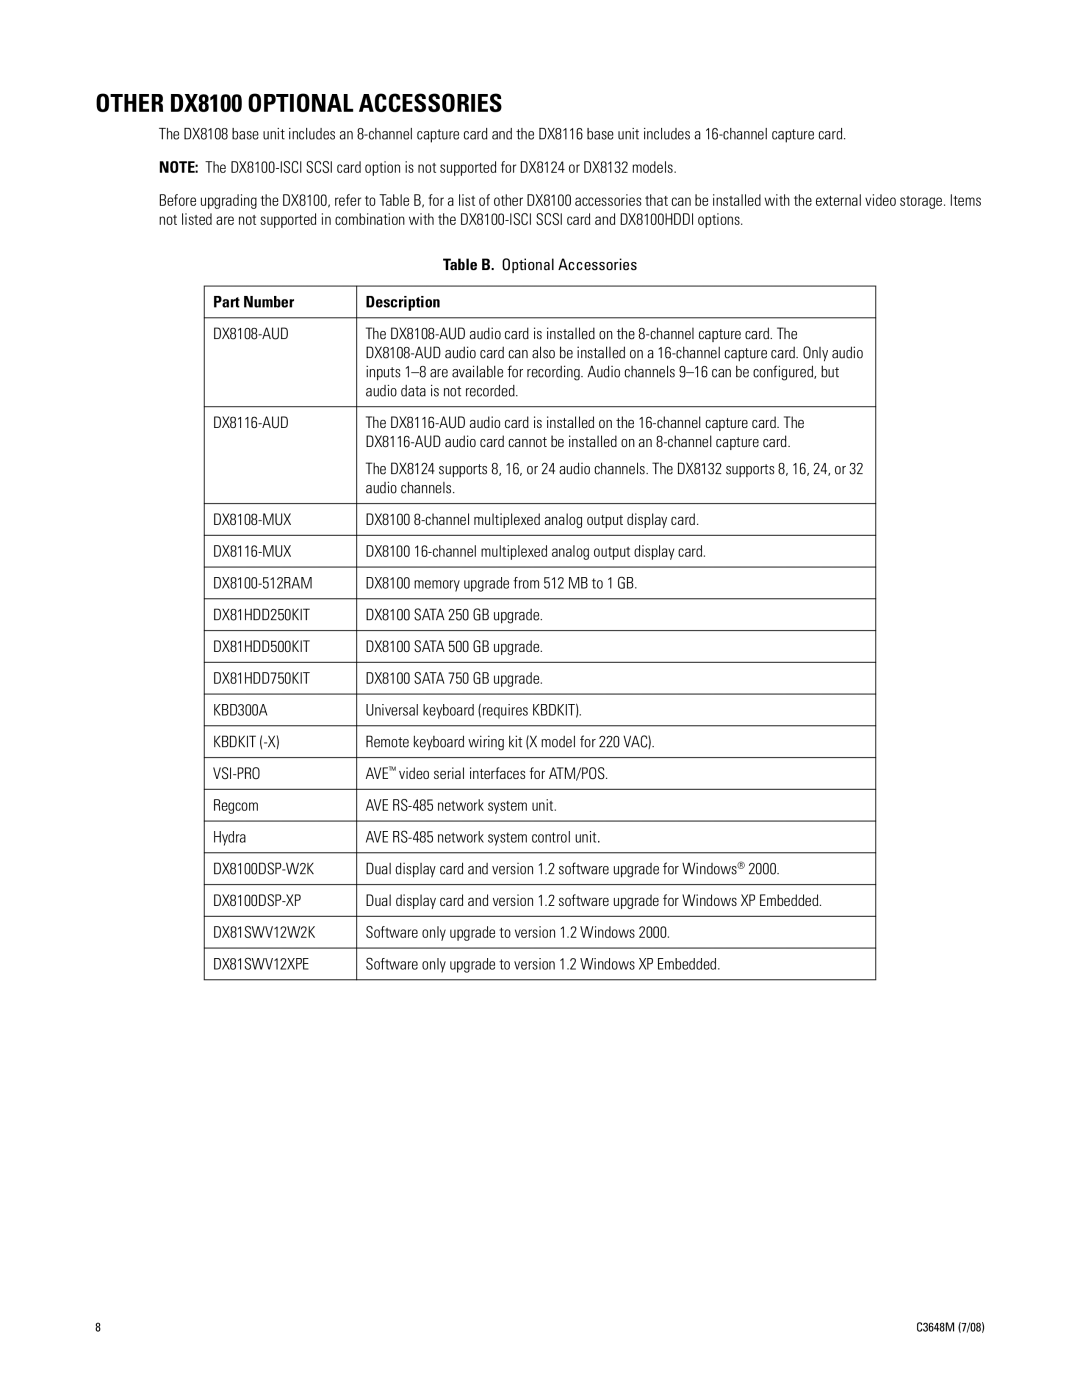 Pelco dx8100 manual OTHER DX8100 OPTIONAL ACCESSORIES, Part Number, Description 